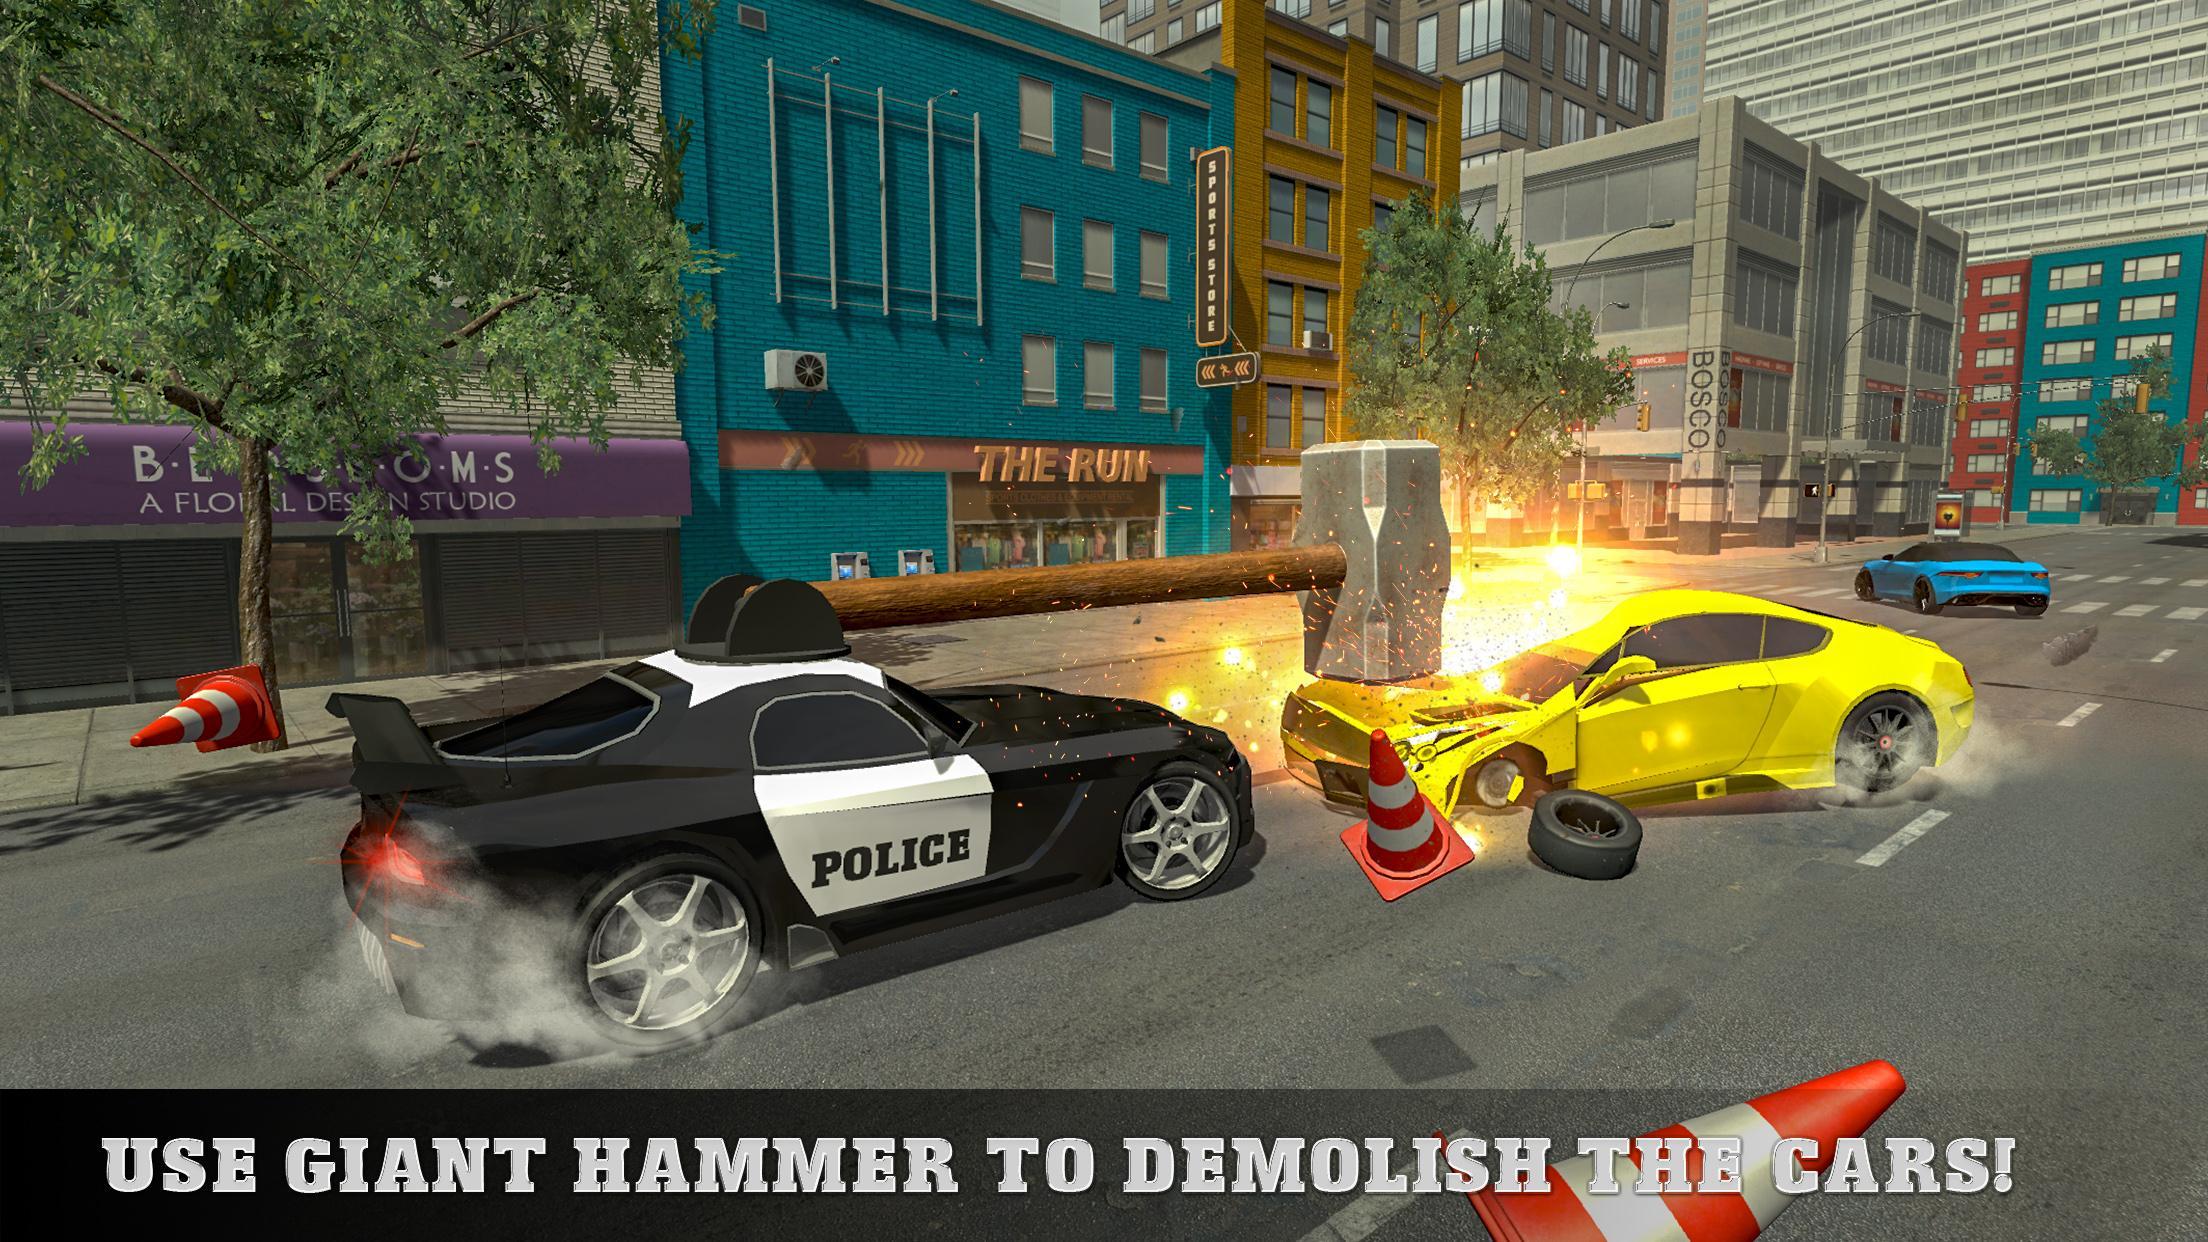 Us Police Chase Hammer Car Crash Simulator Game For Android Apk Download - christmas car crash simulator roblox